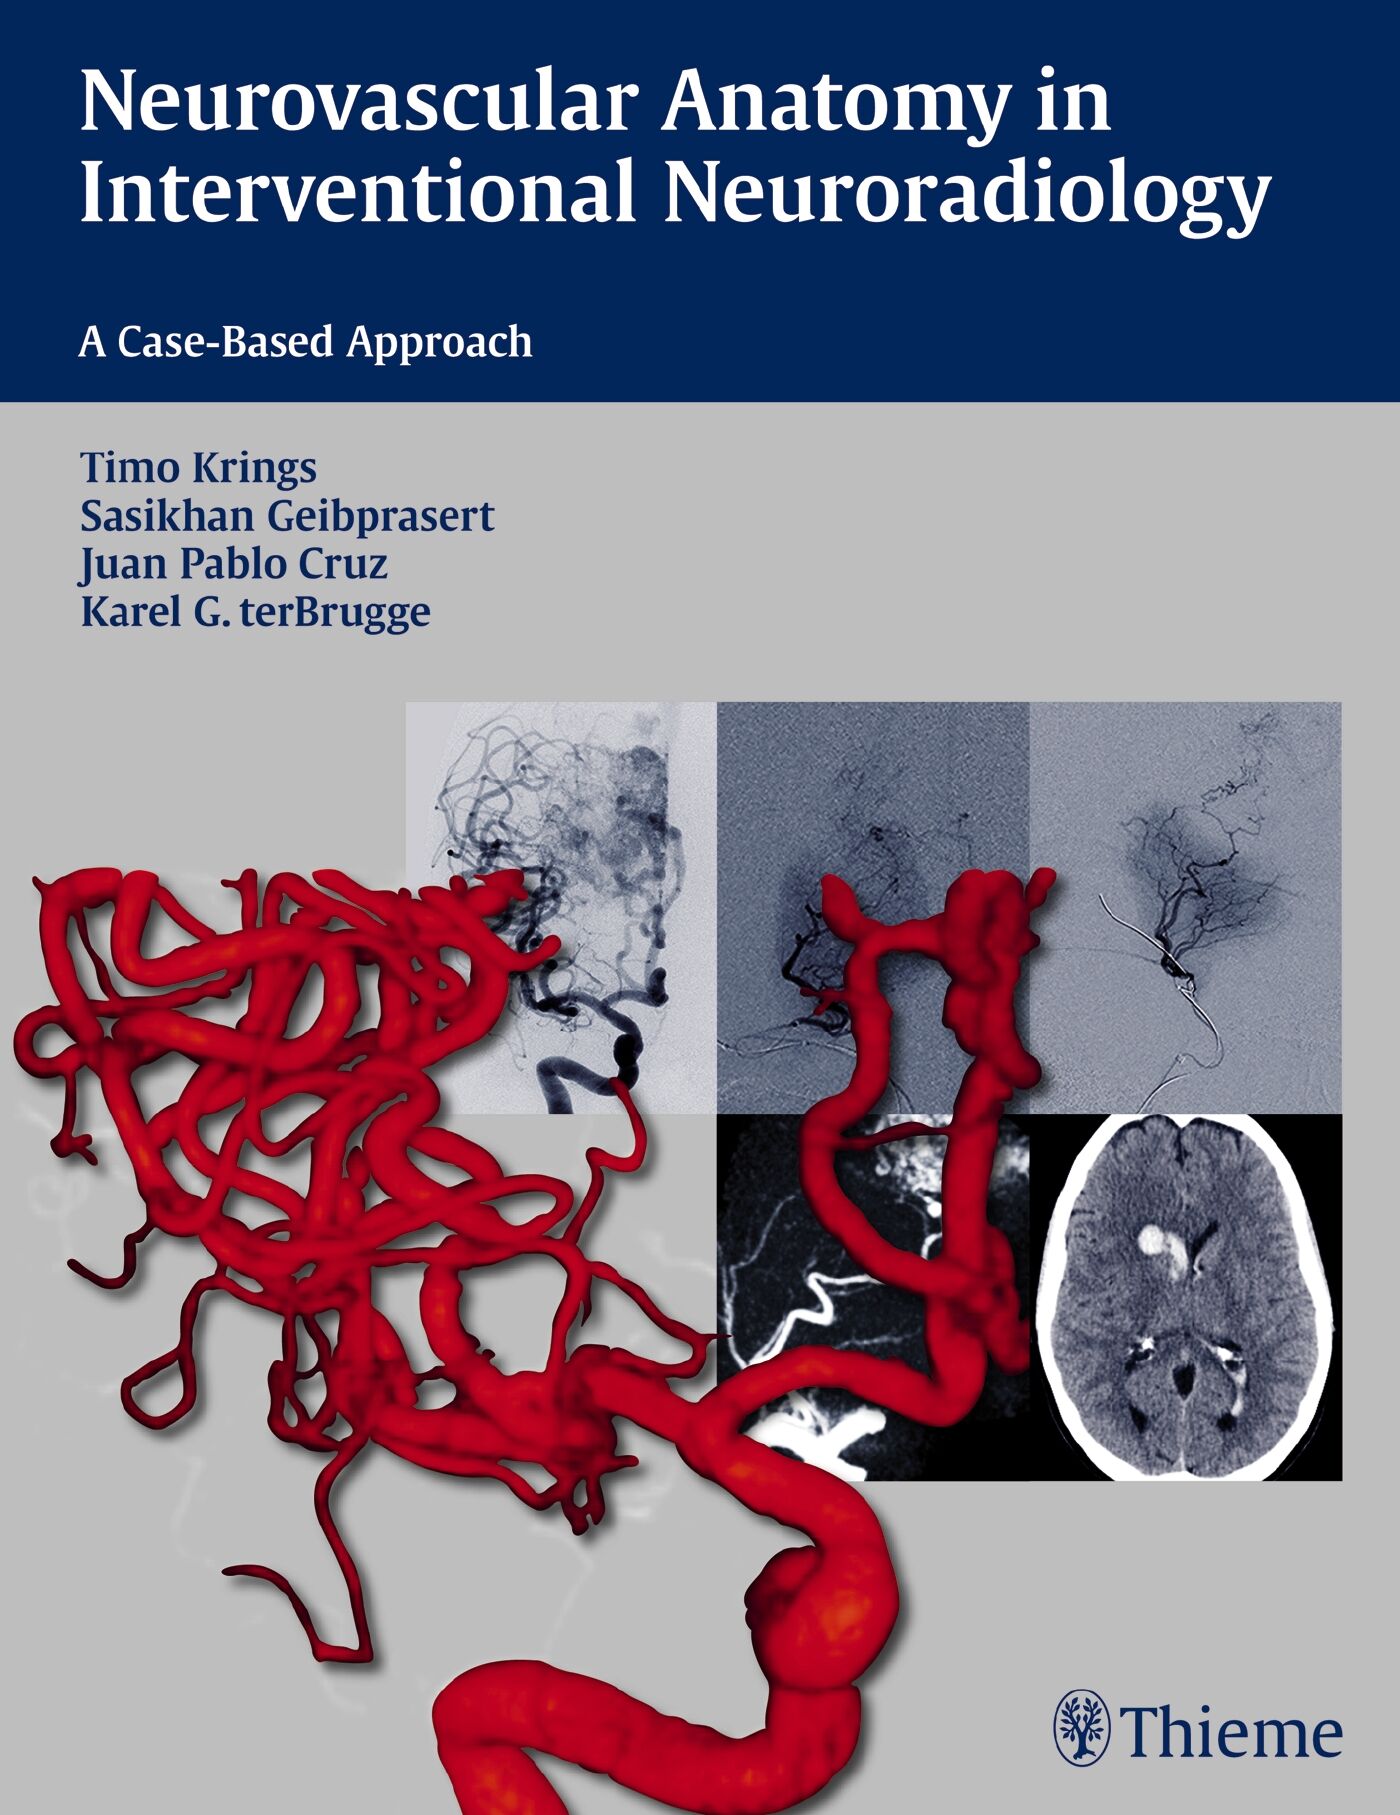 Neurovascular Anatomy in Interventional Neuroradiology, 9781604068399